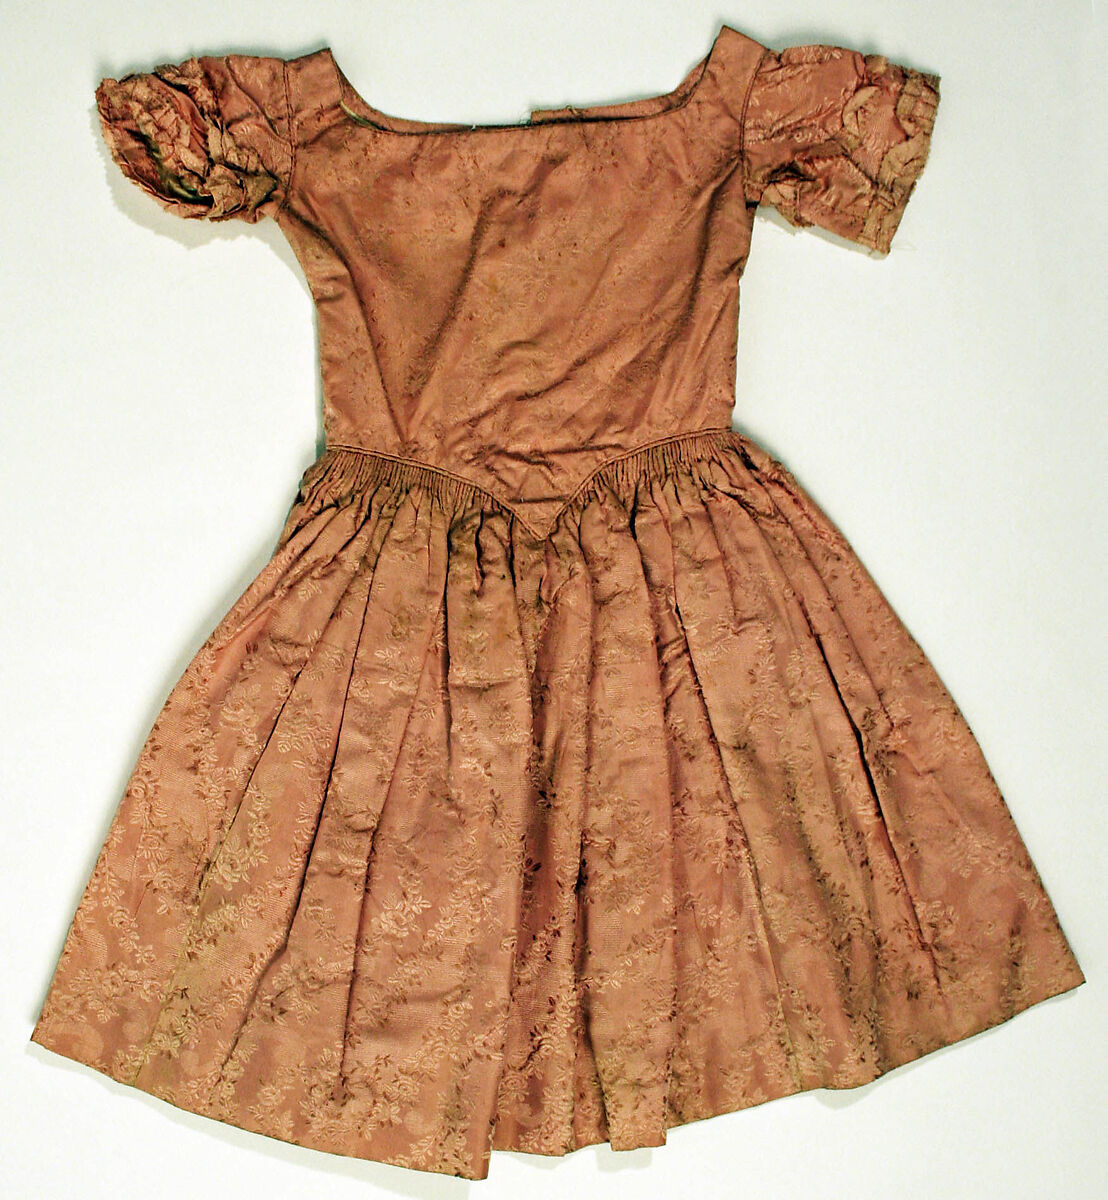 Dress, silk, probably British 